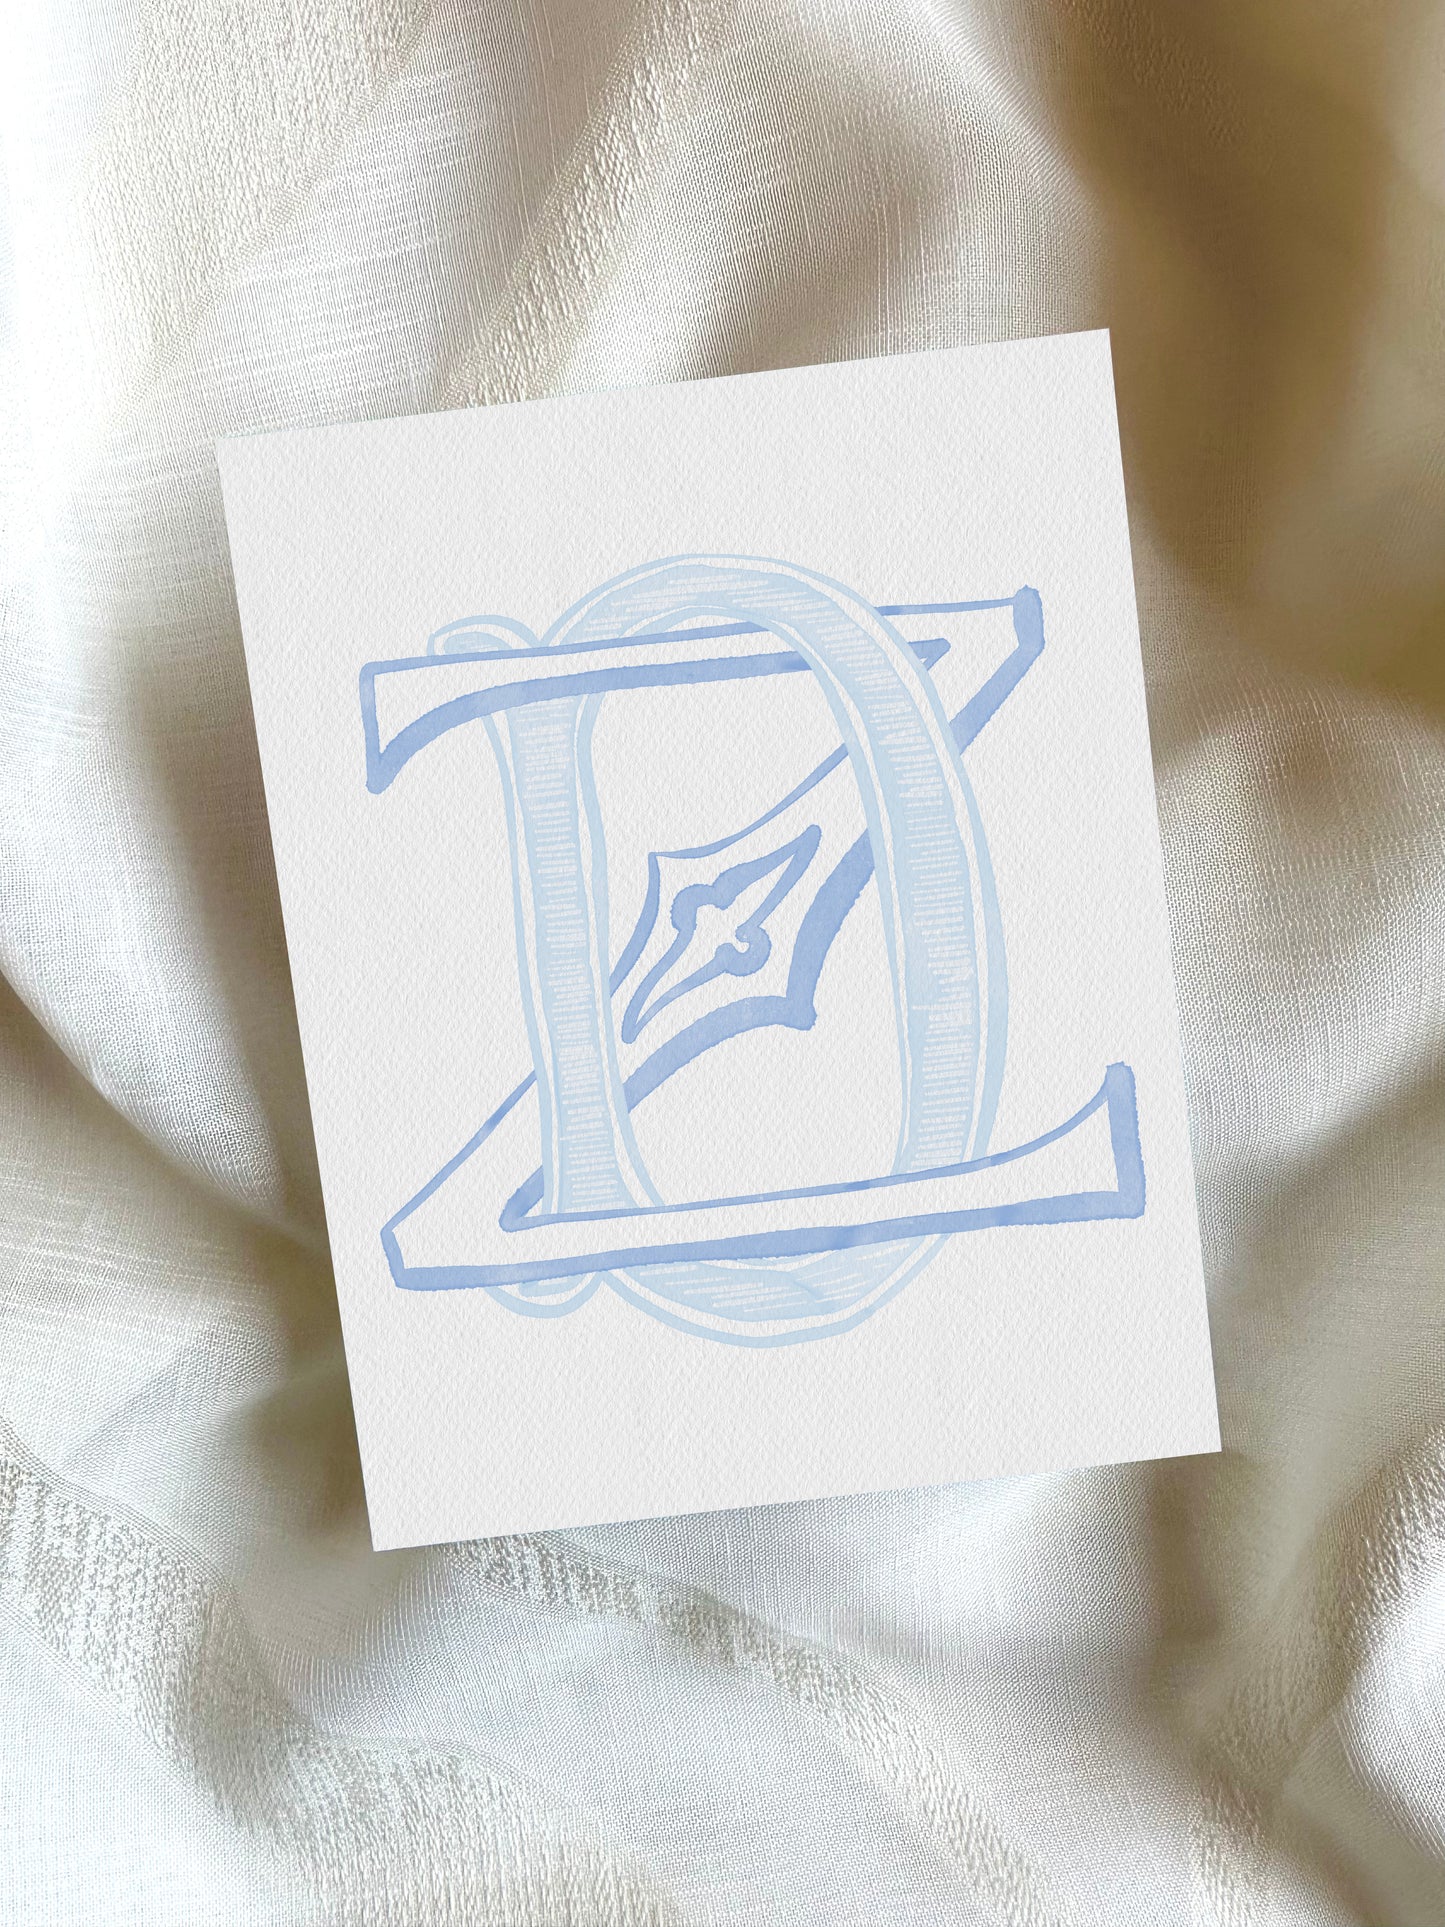 2 Letter Monogram with Letters DZ ZD | Digital Download - Wedding Monogram SVG, Personal Logo, Wedding Logo for Wedding Invitations The Wedding Crest Lab